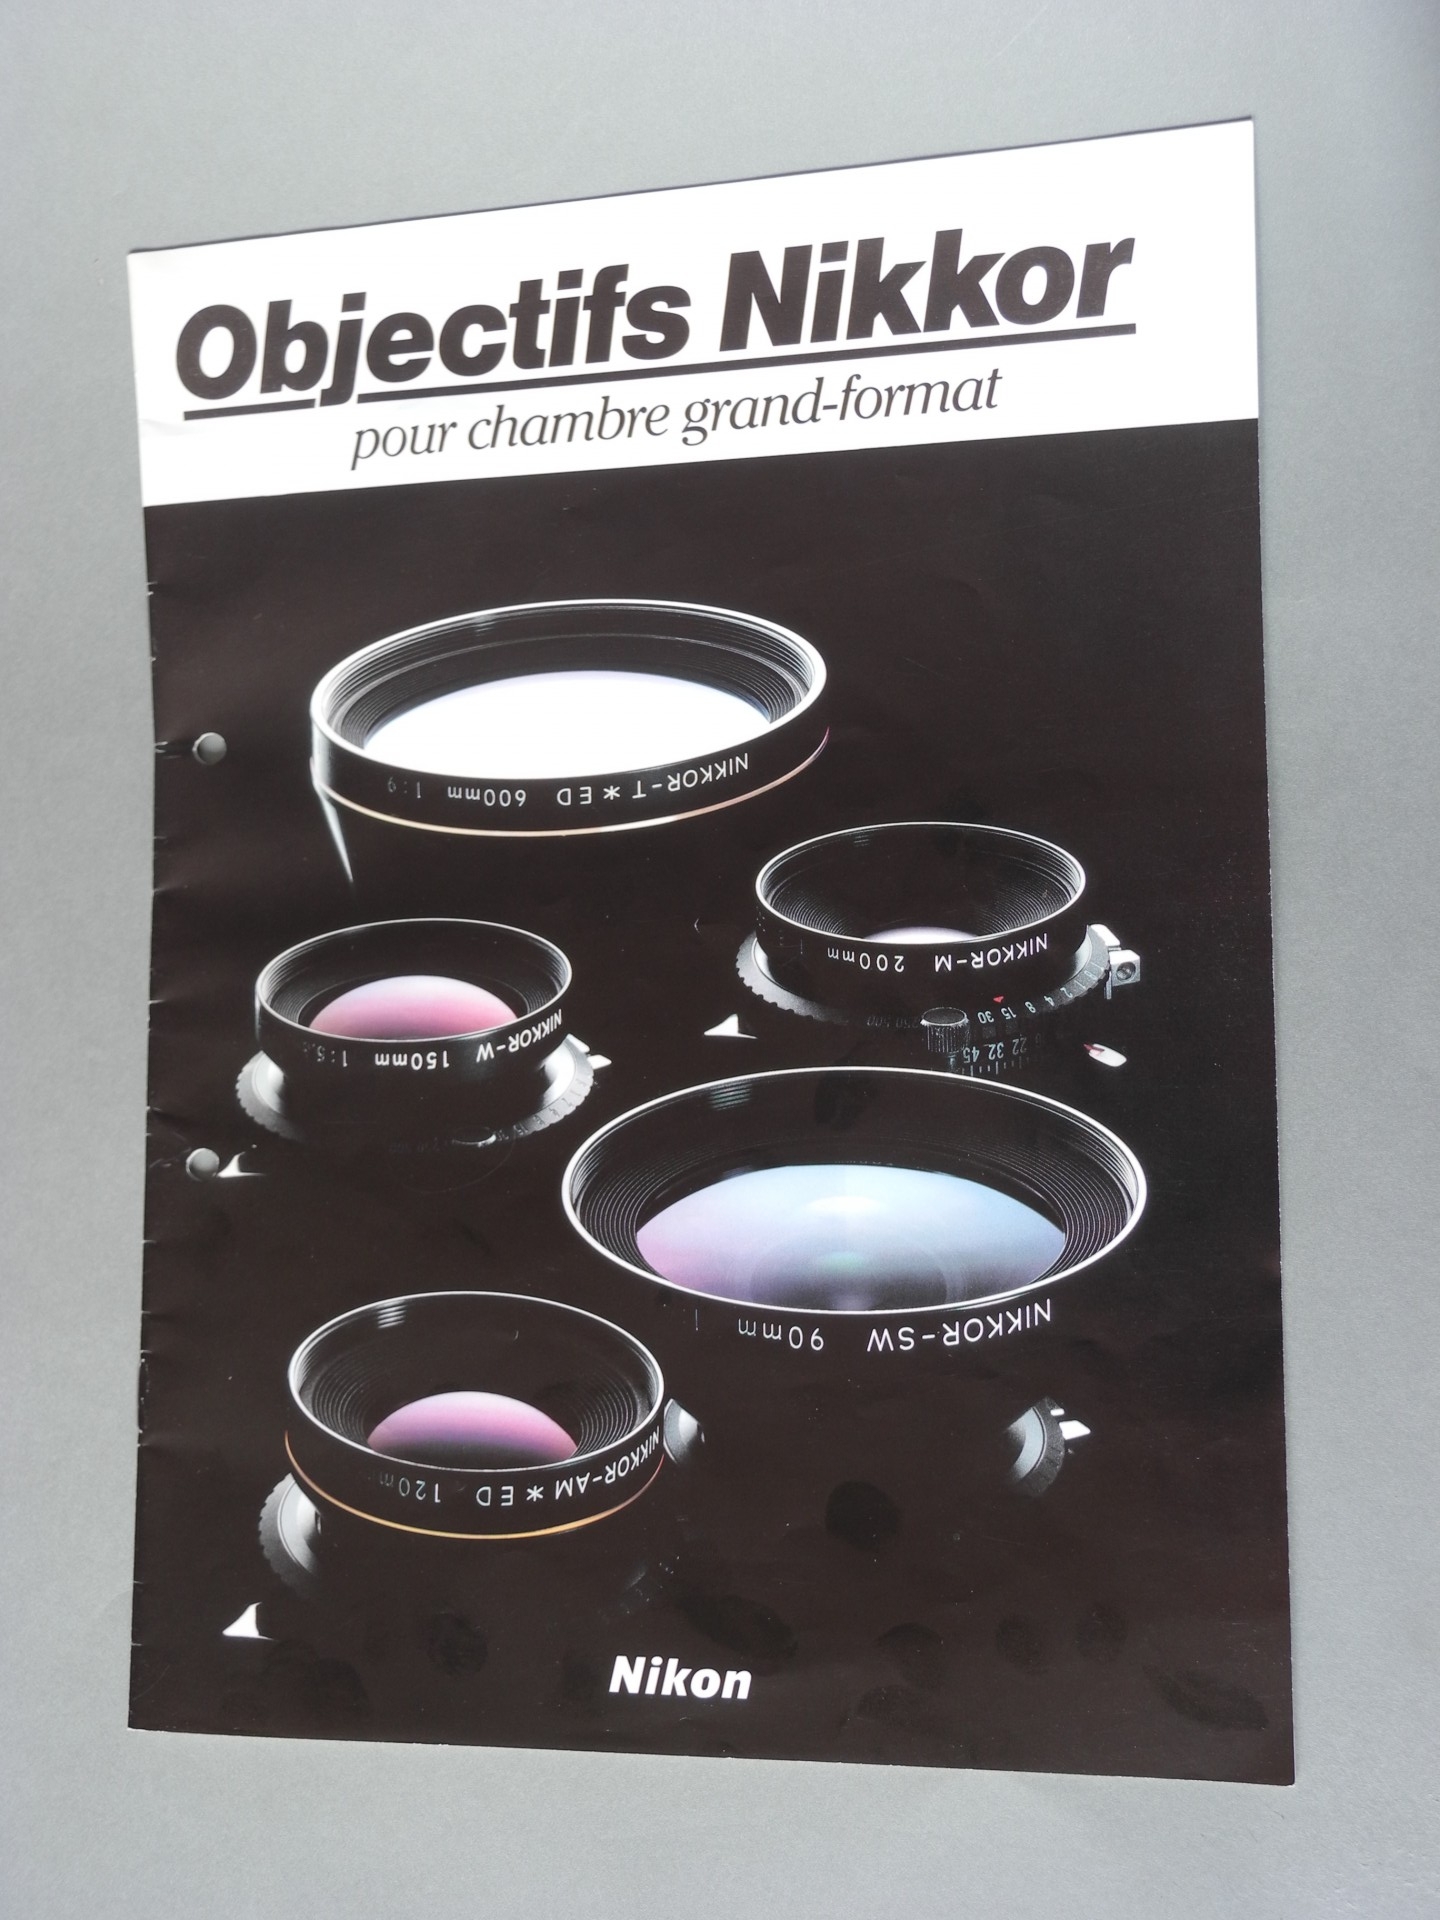 *Brochure Objectifs Nikkor 19 pages *